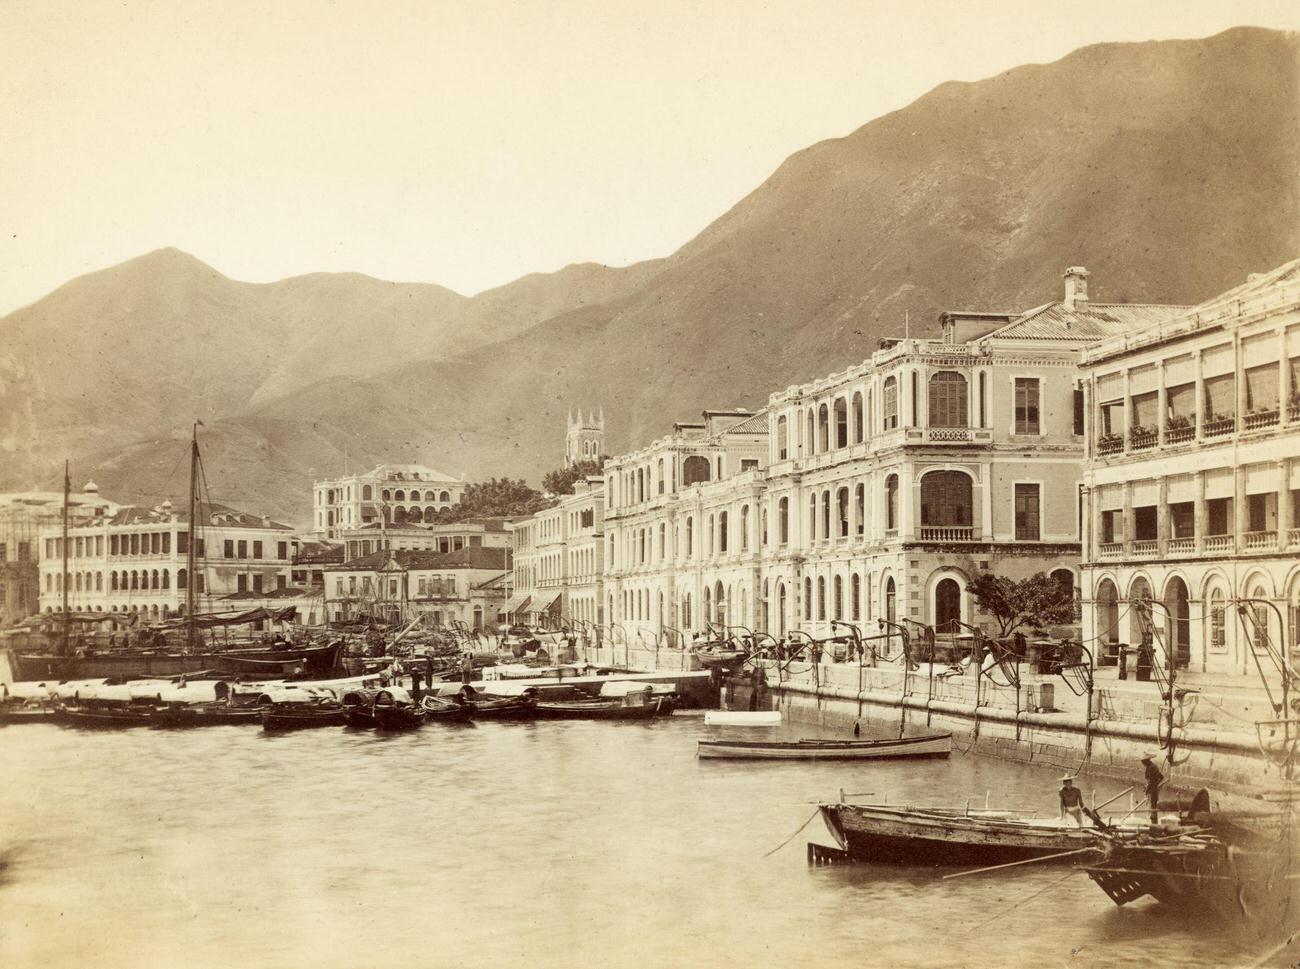 Hong Kong Harbour in 1869, during the Duke of Edinburgh's visit.